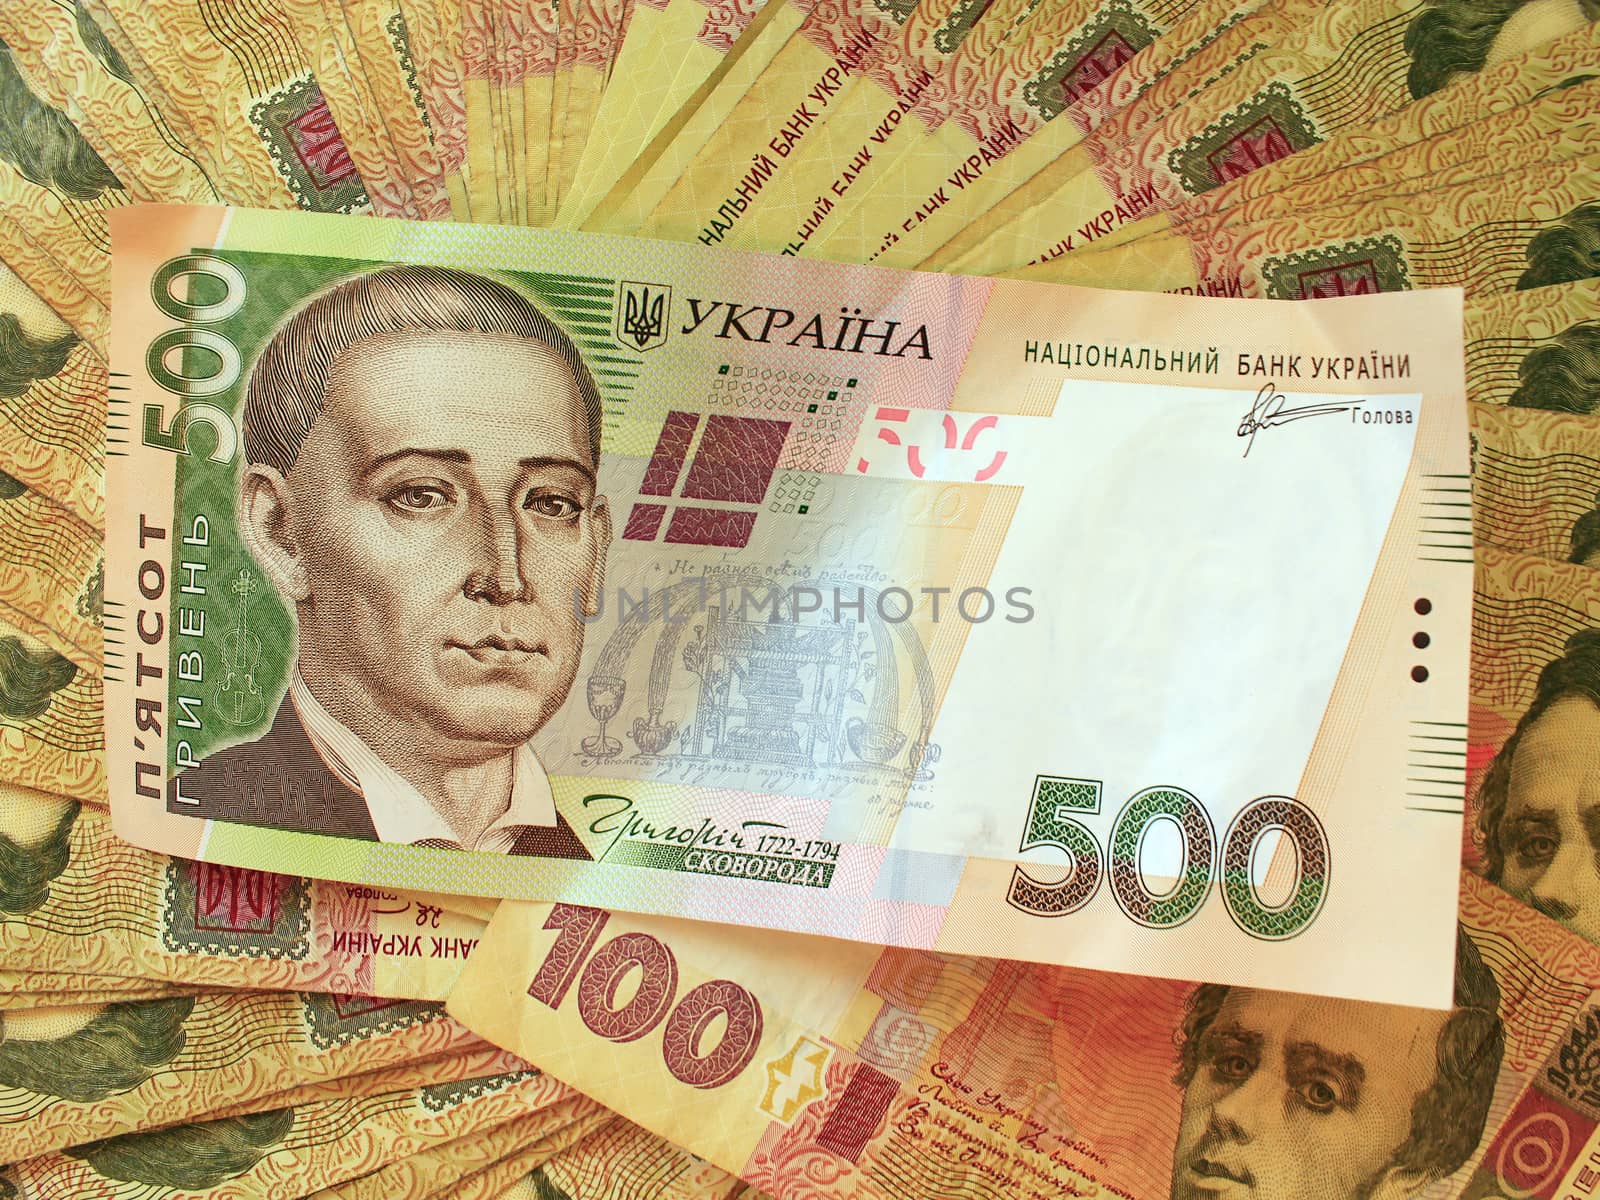 background of the Ukrainian money by alexmak